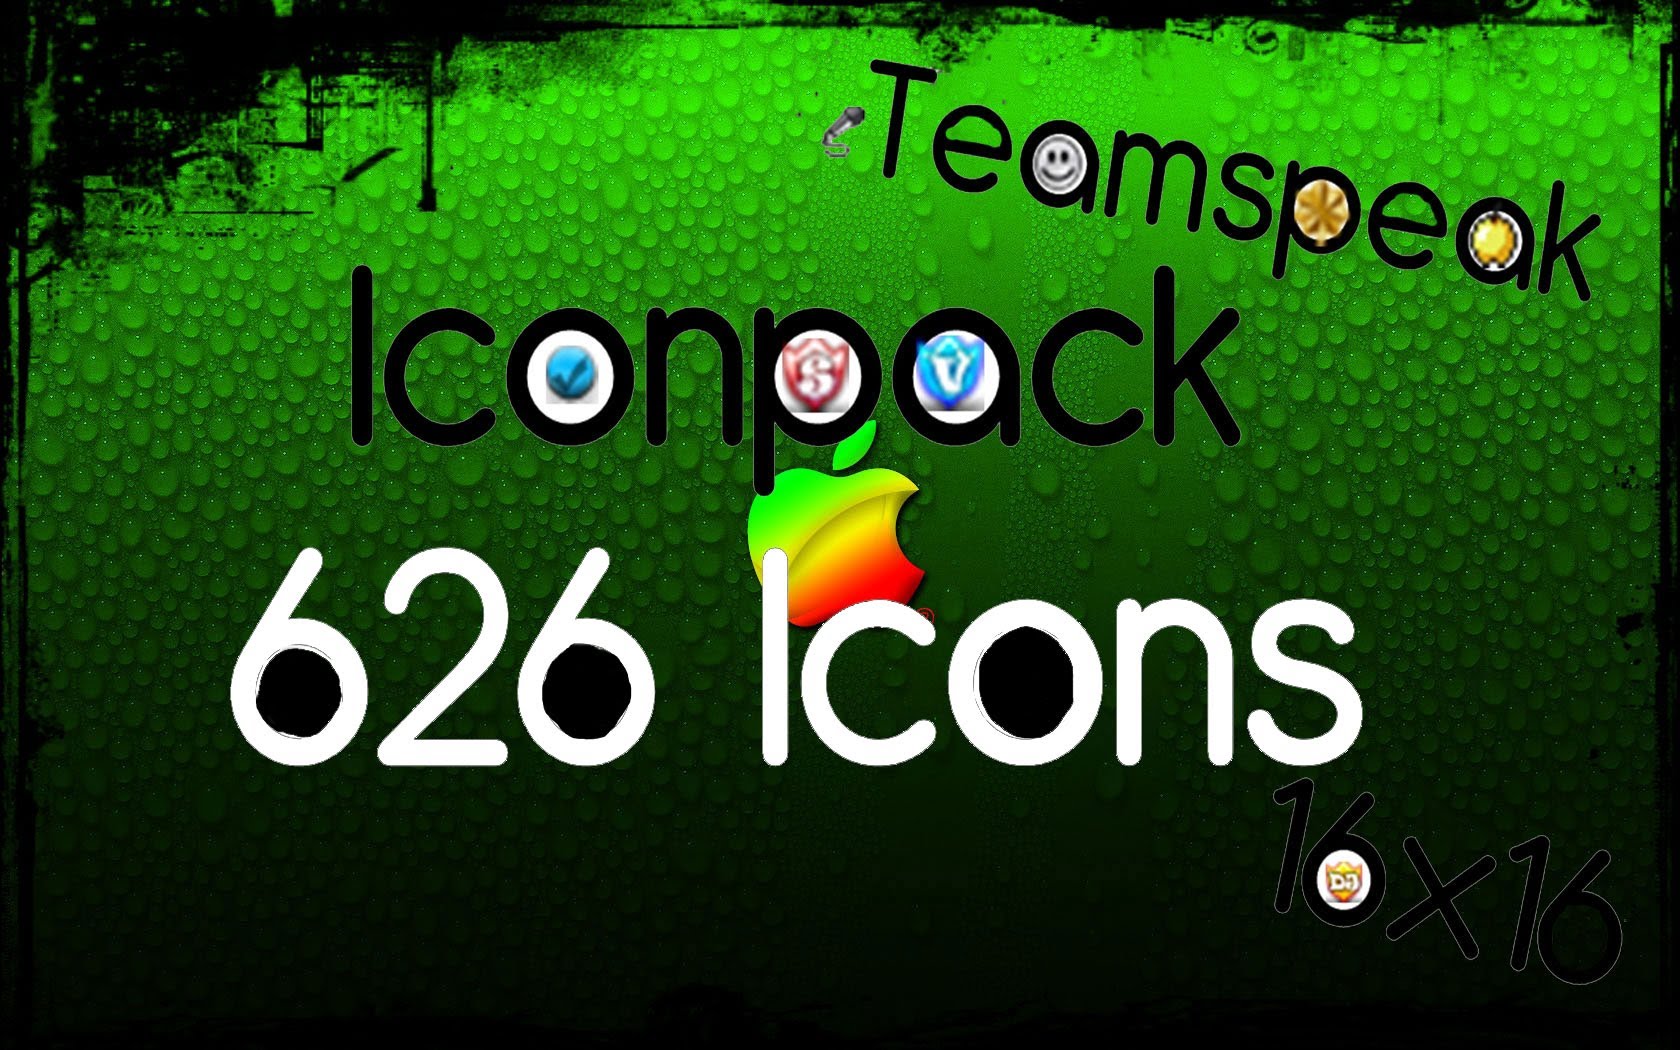 teamspeak wow icons size